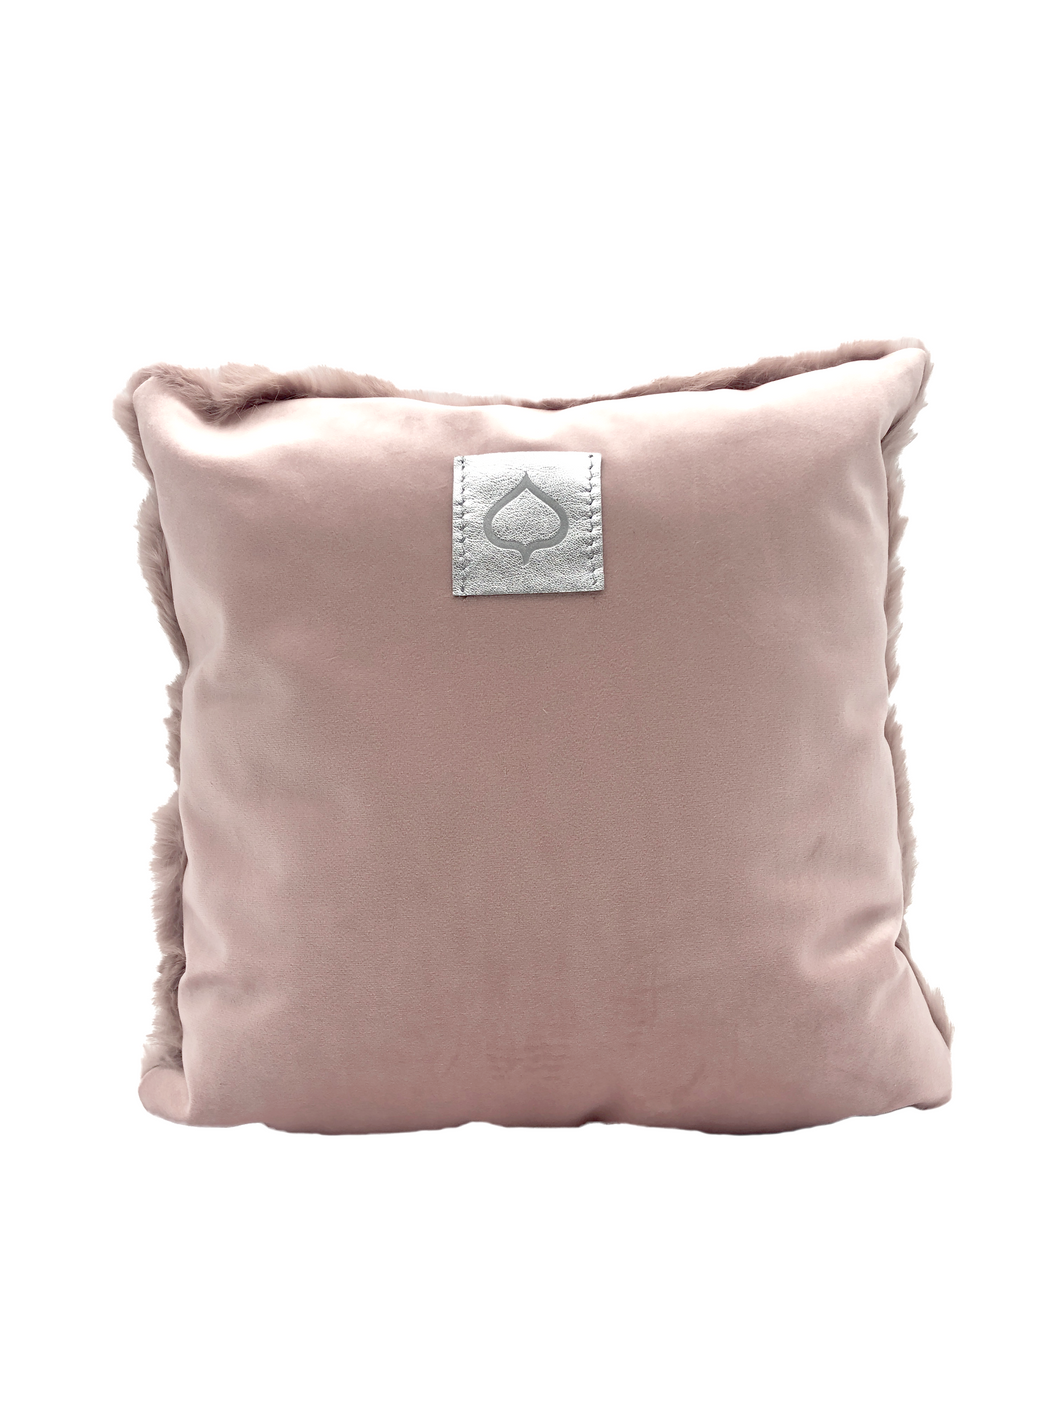 Dyed Rabbit Cushion - Blush